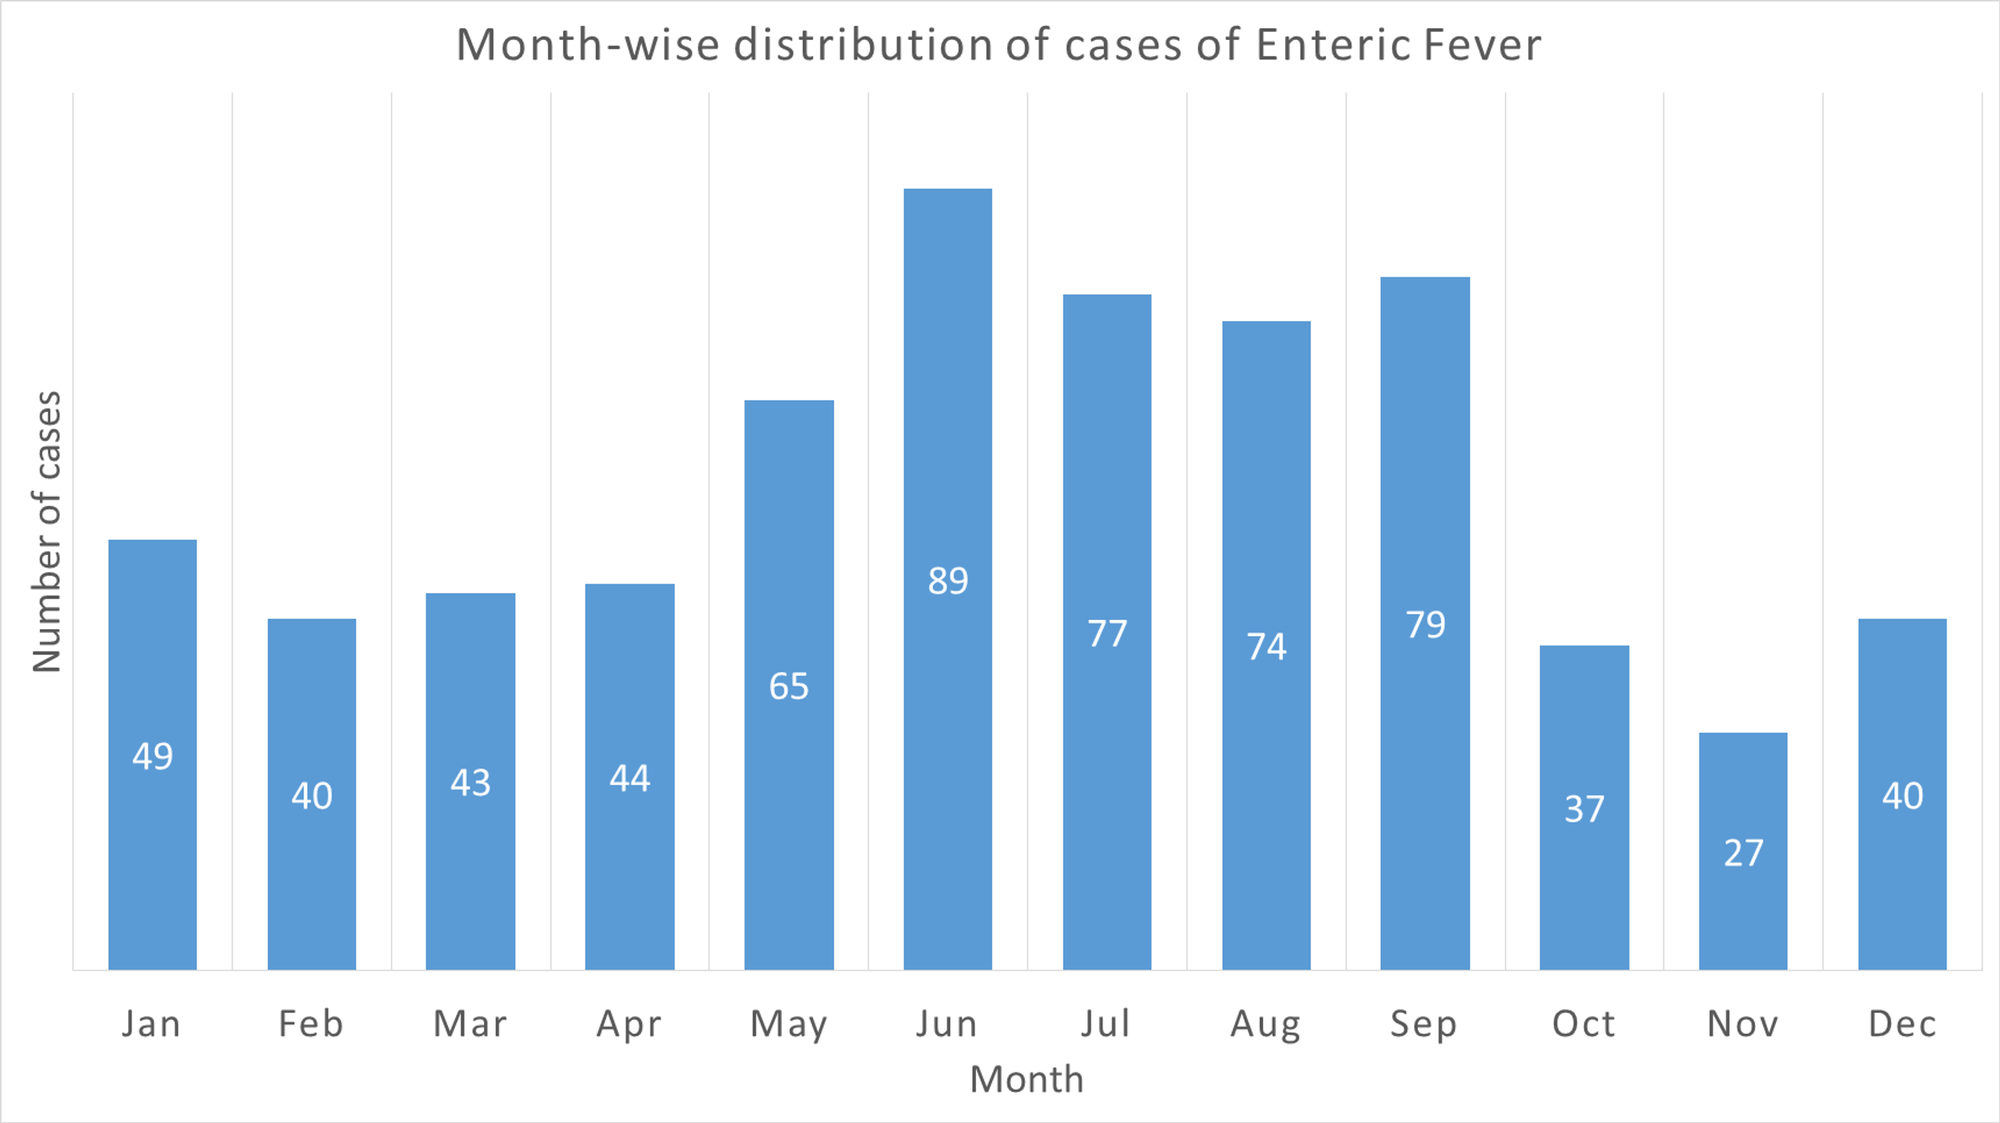 Himedia Antibiotic Sensitivity Chart Pdf